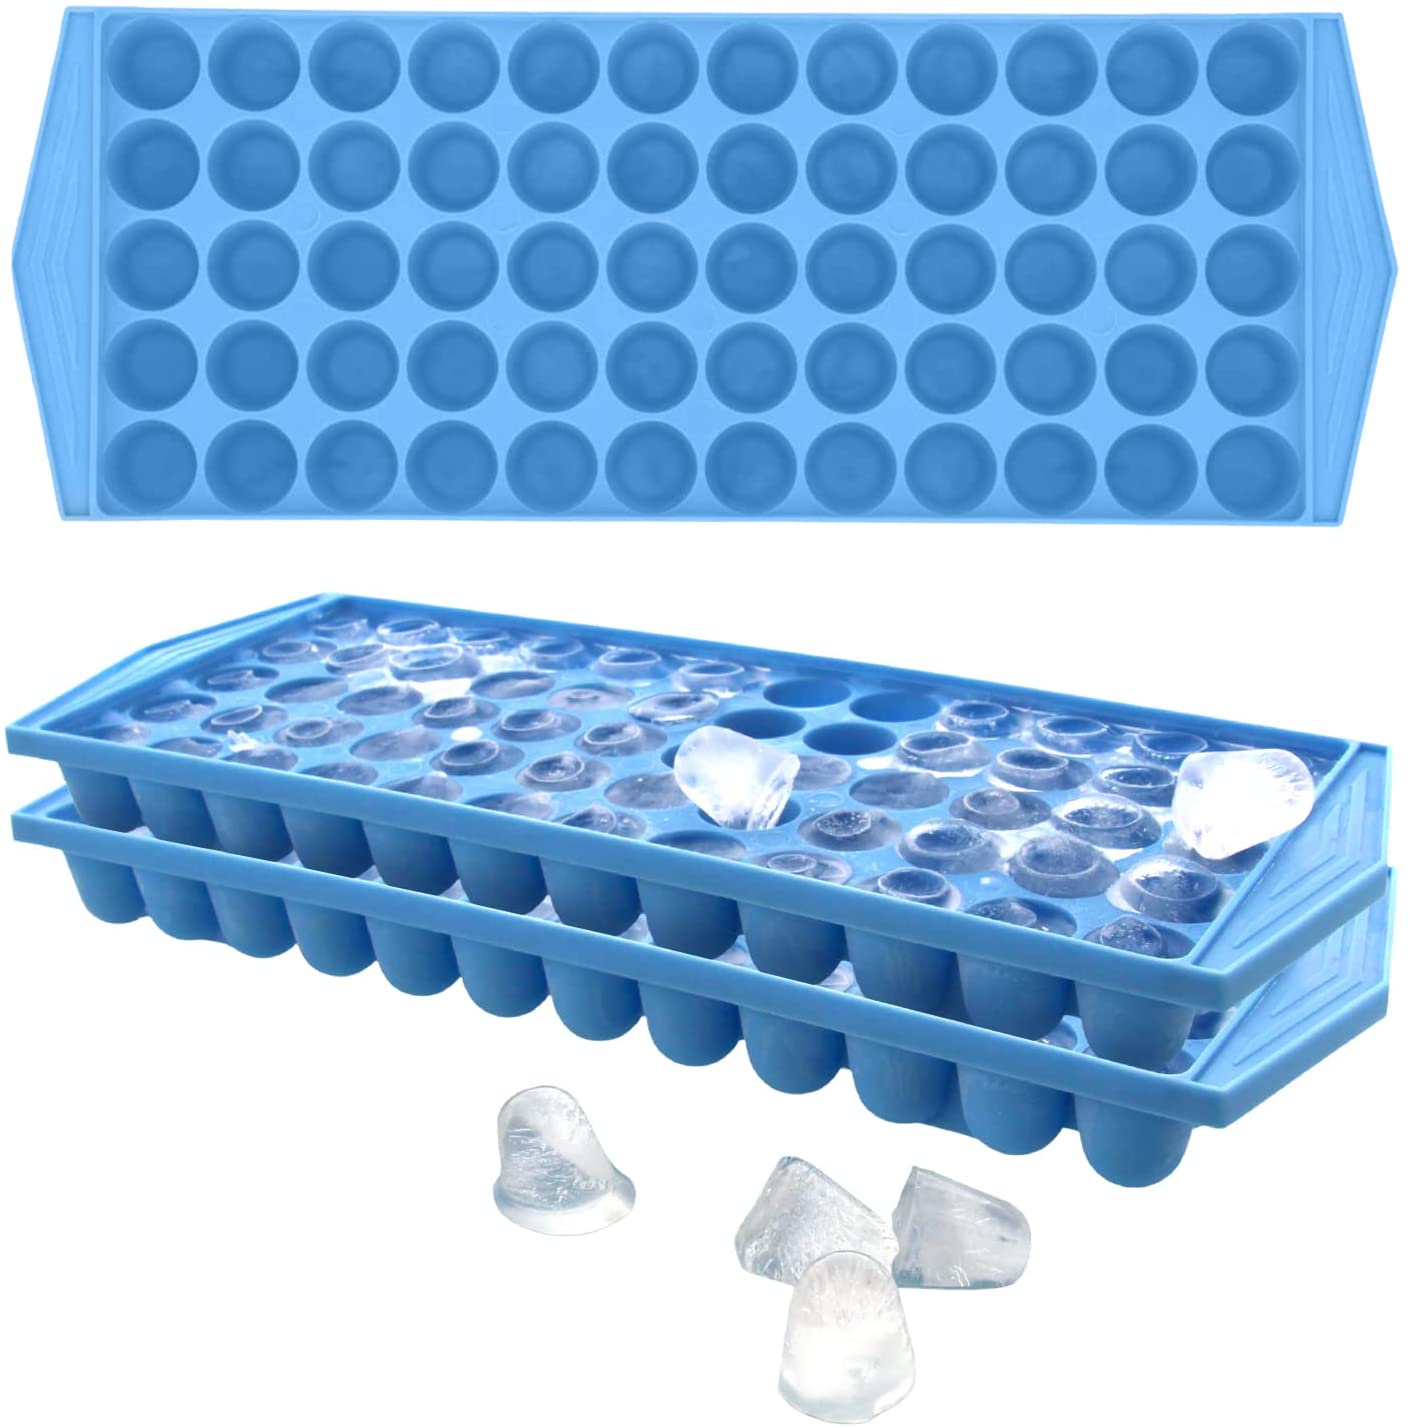 https://thekrazycouponlady.com/wp-content/uploads/2022/07/tiktok-made-me-buy-it-arrow-mini-ice-cube-trays-2022-1658541628-1658541629.jpg